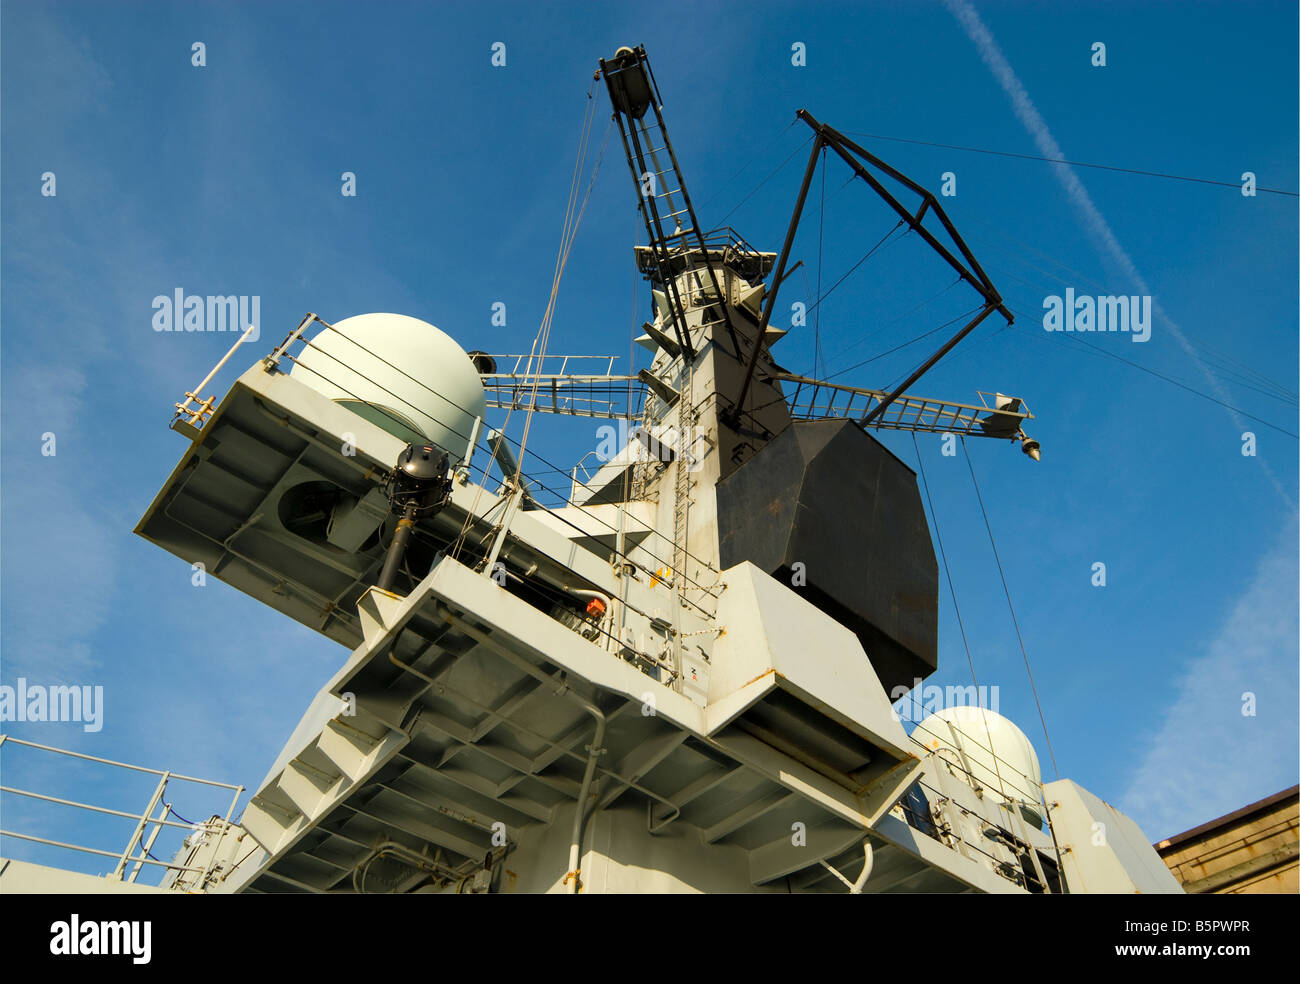 Antennae and radar on navy ship Stock Photo